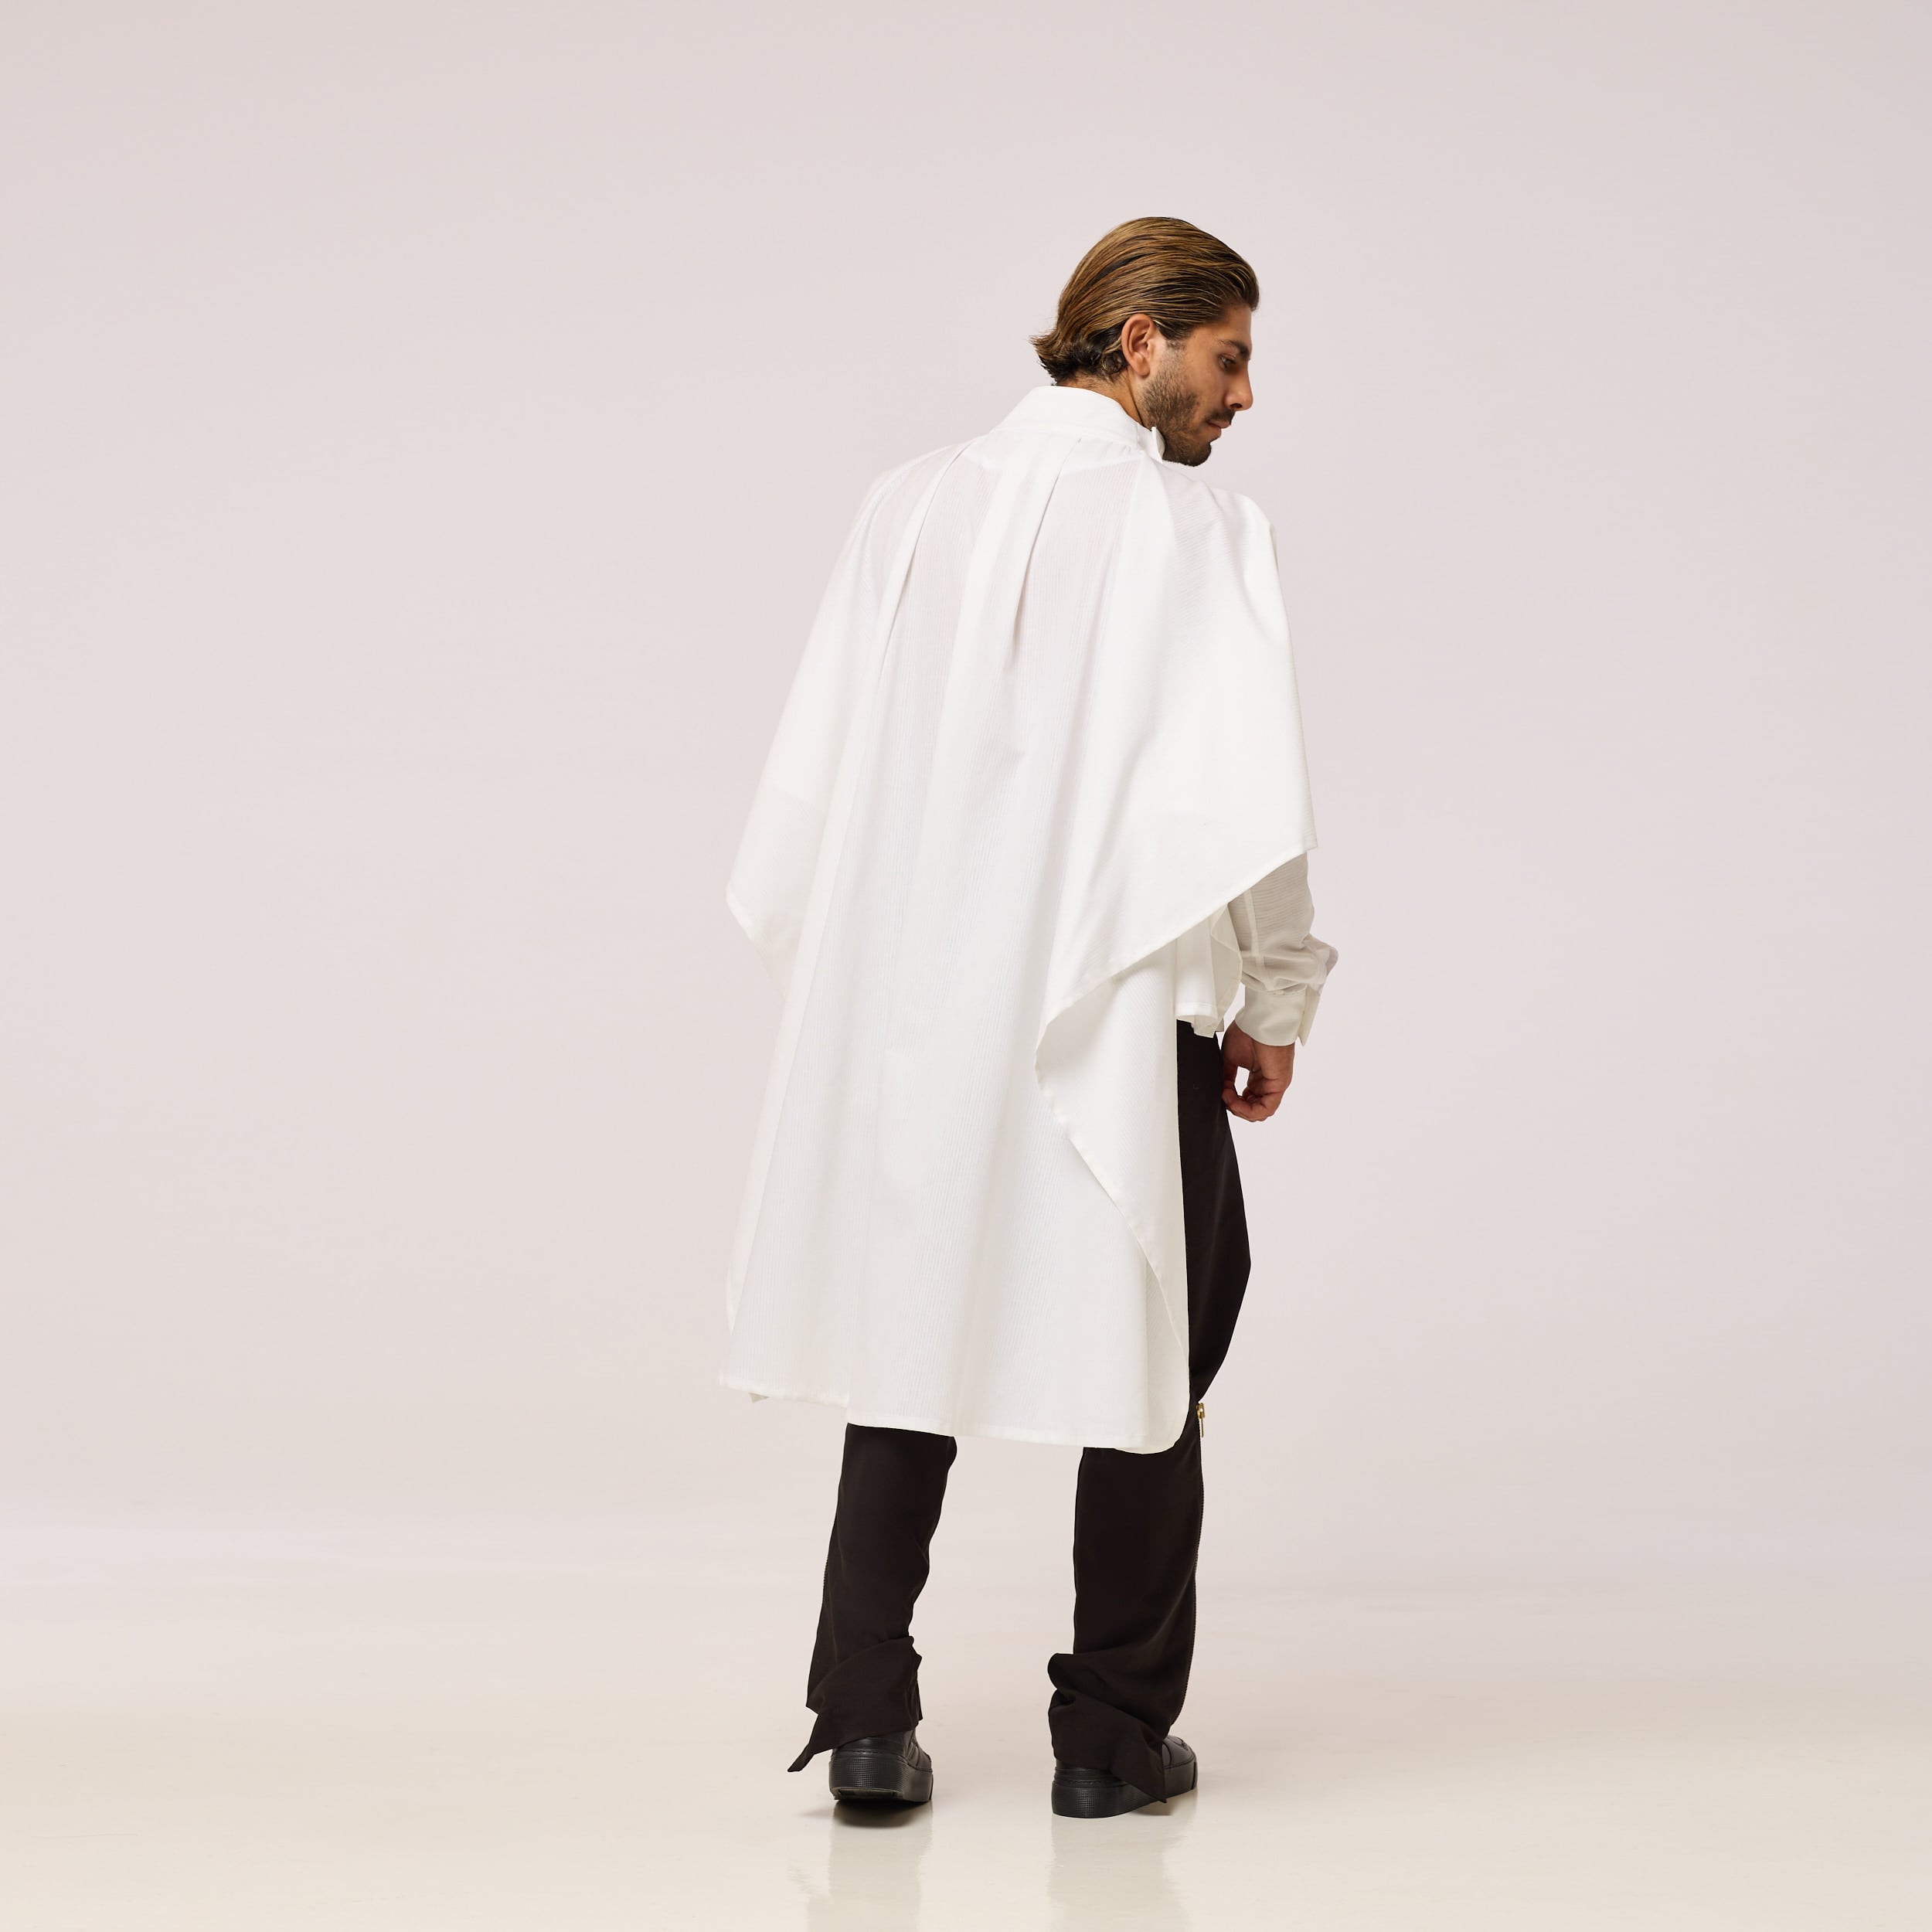 ZERØ London - Back view, mens zero waste shirt in white, designed & made in London